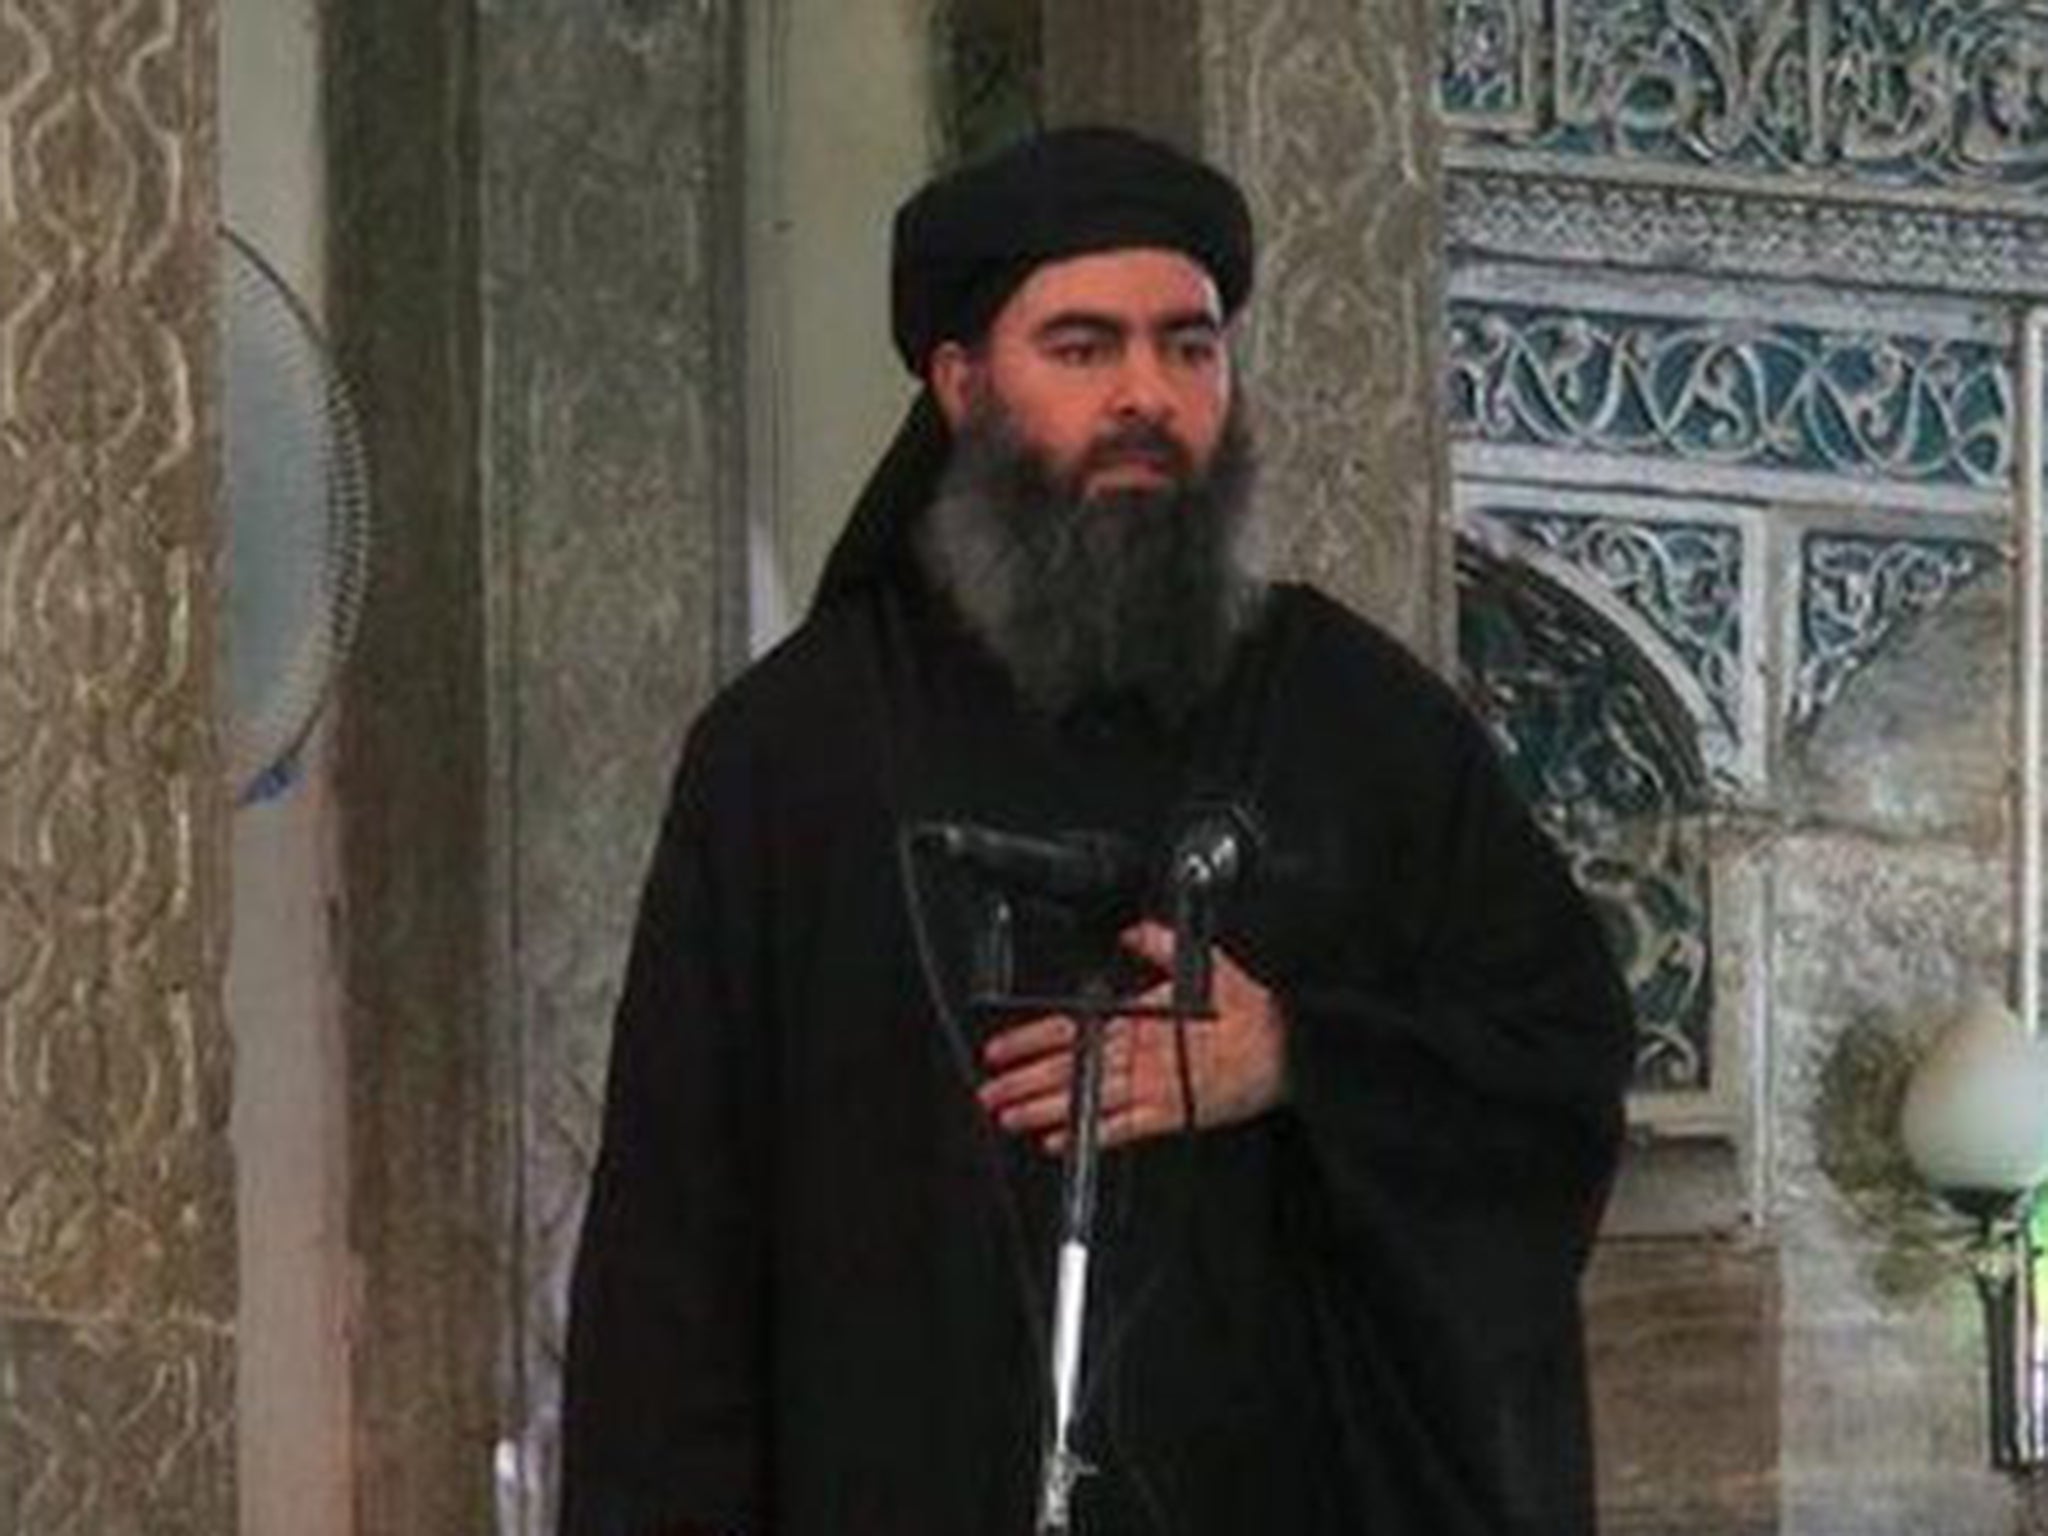 Abu Bakr al-Baghdadi is reportedly in hiding